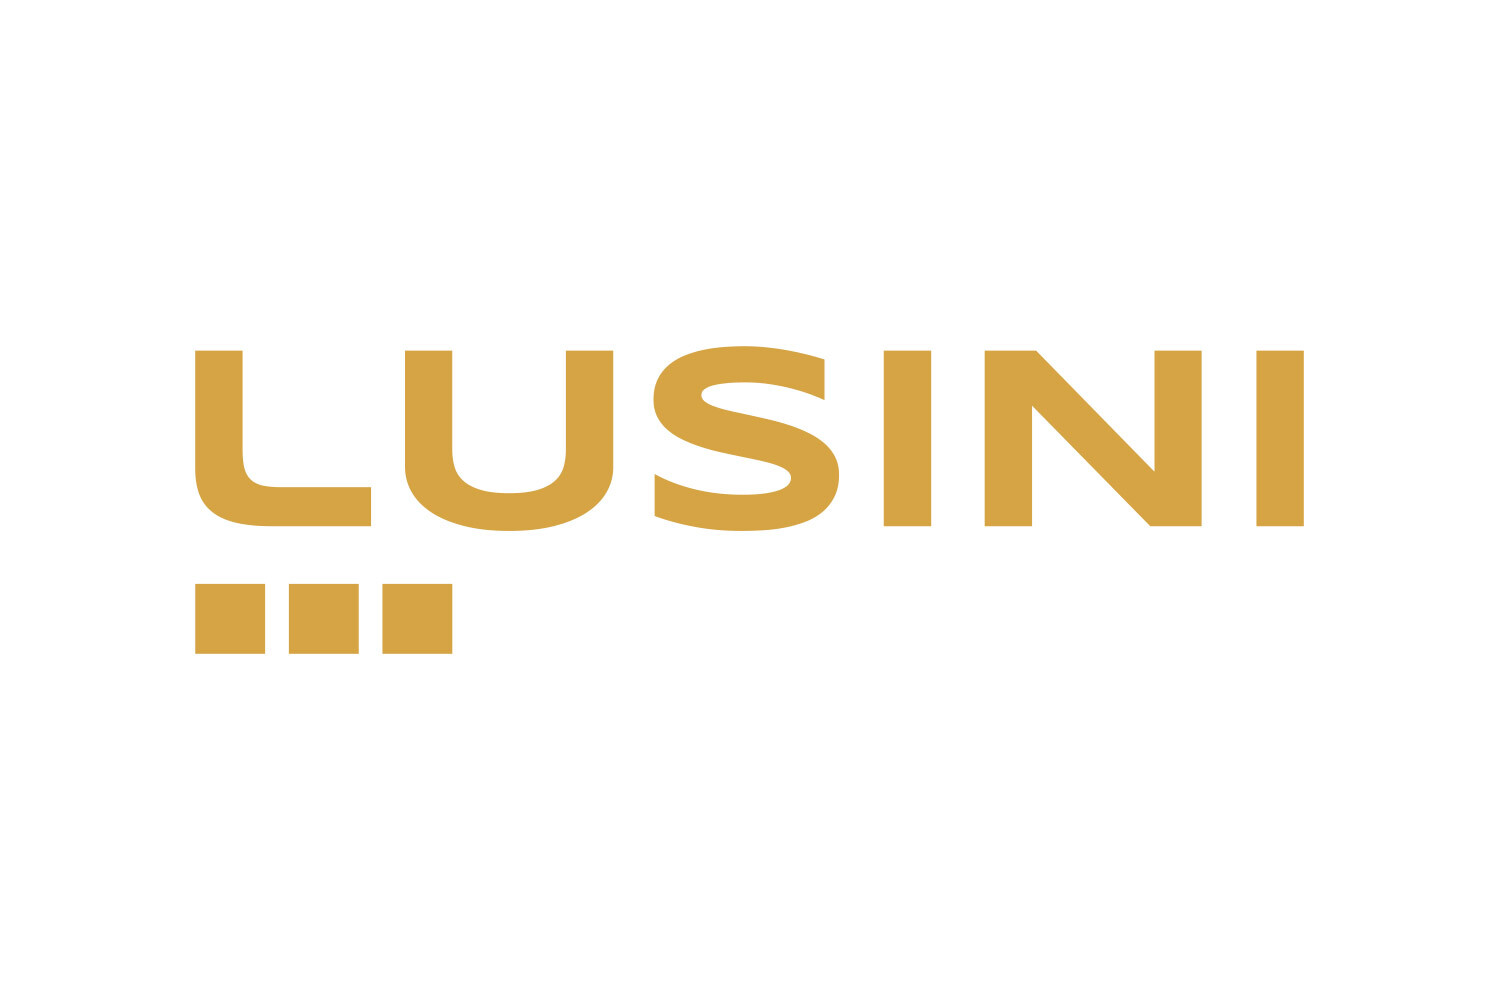 LUSINI Coupons & Promo Codes